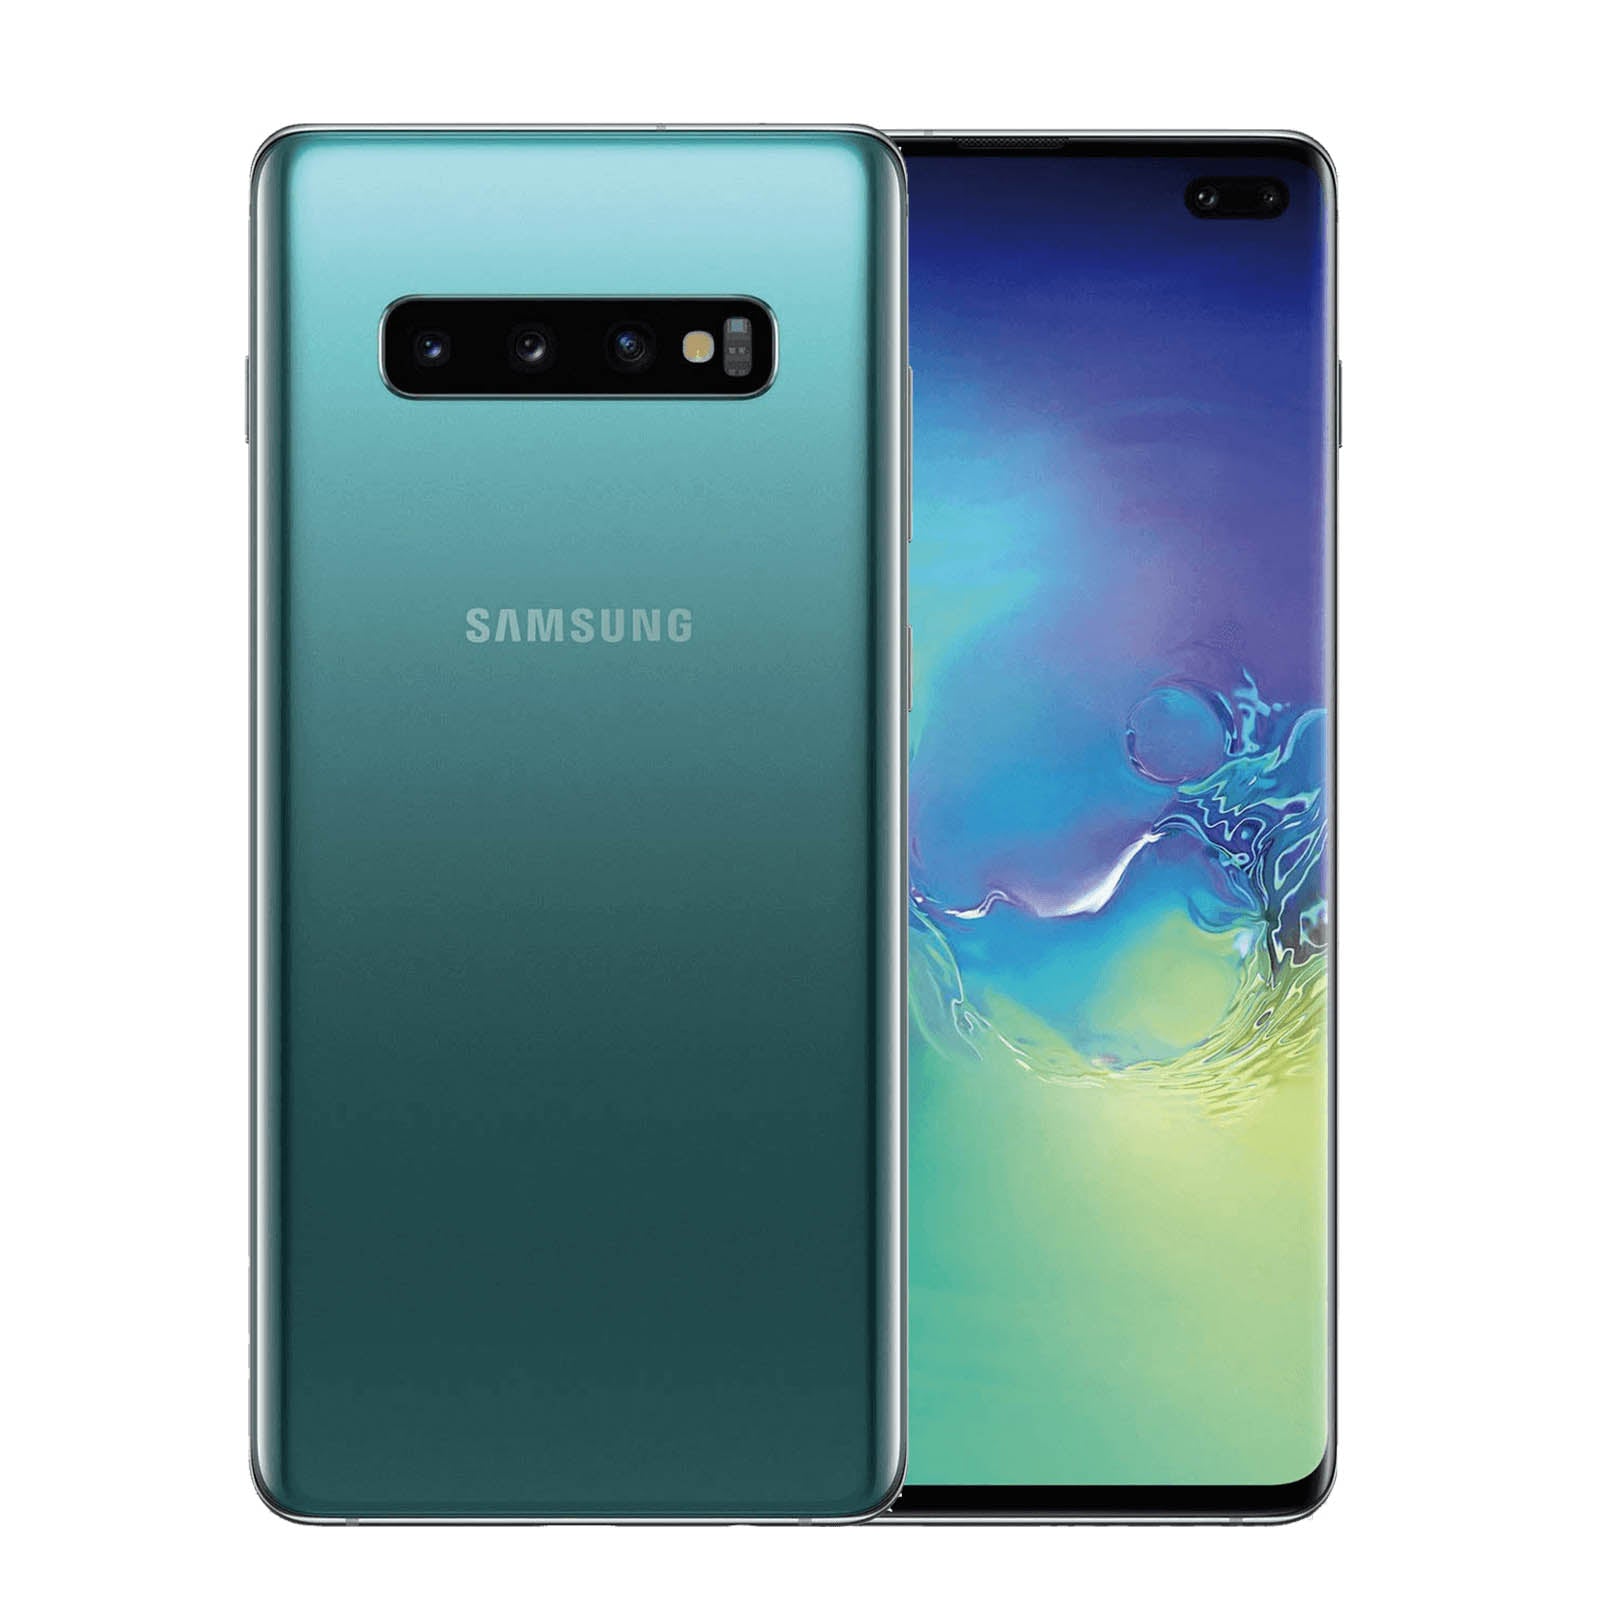 Samsung Galaxy S10 512GB Prism Green Very good - Unlocked